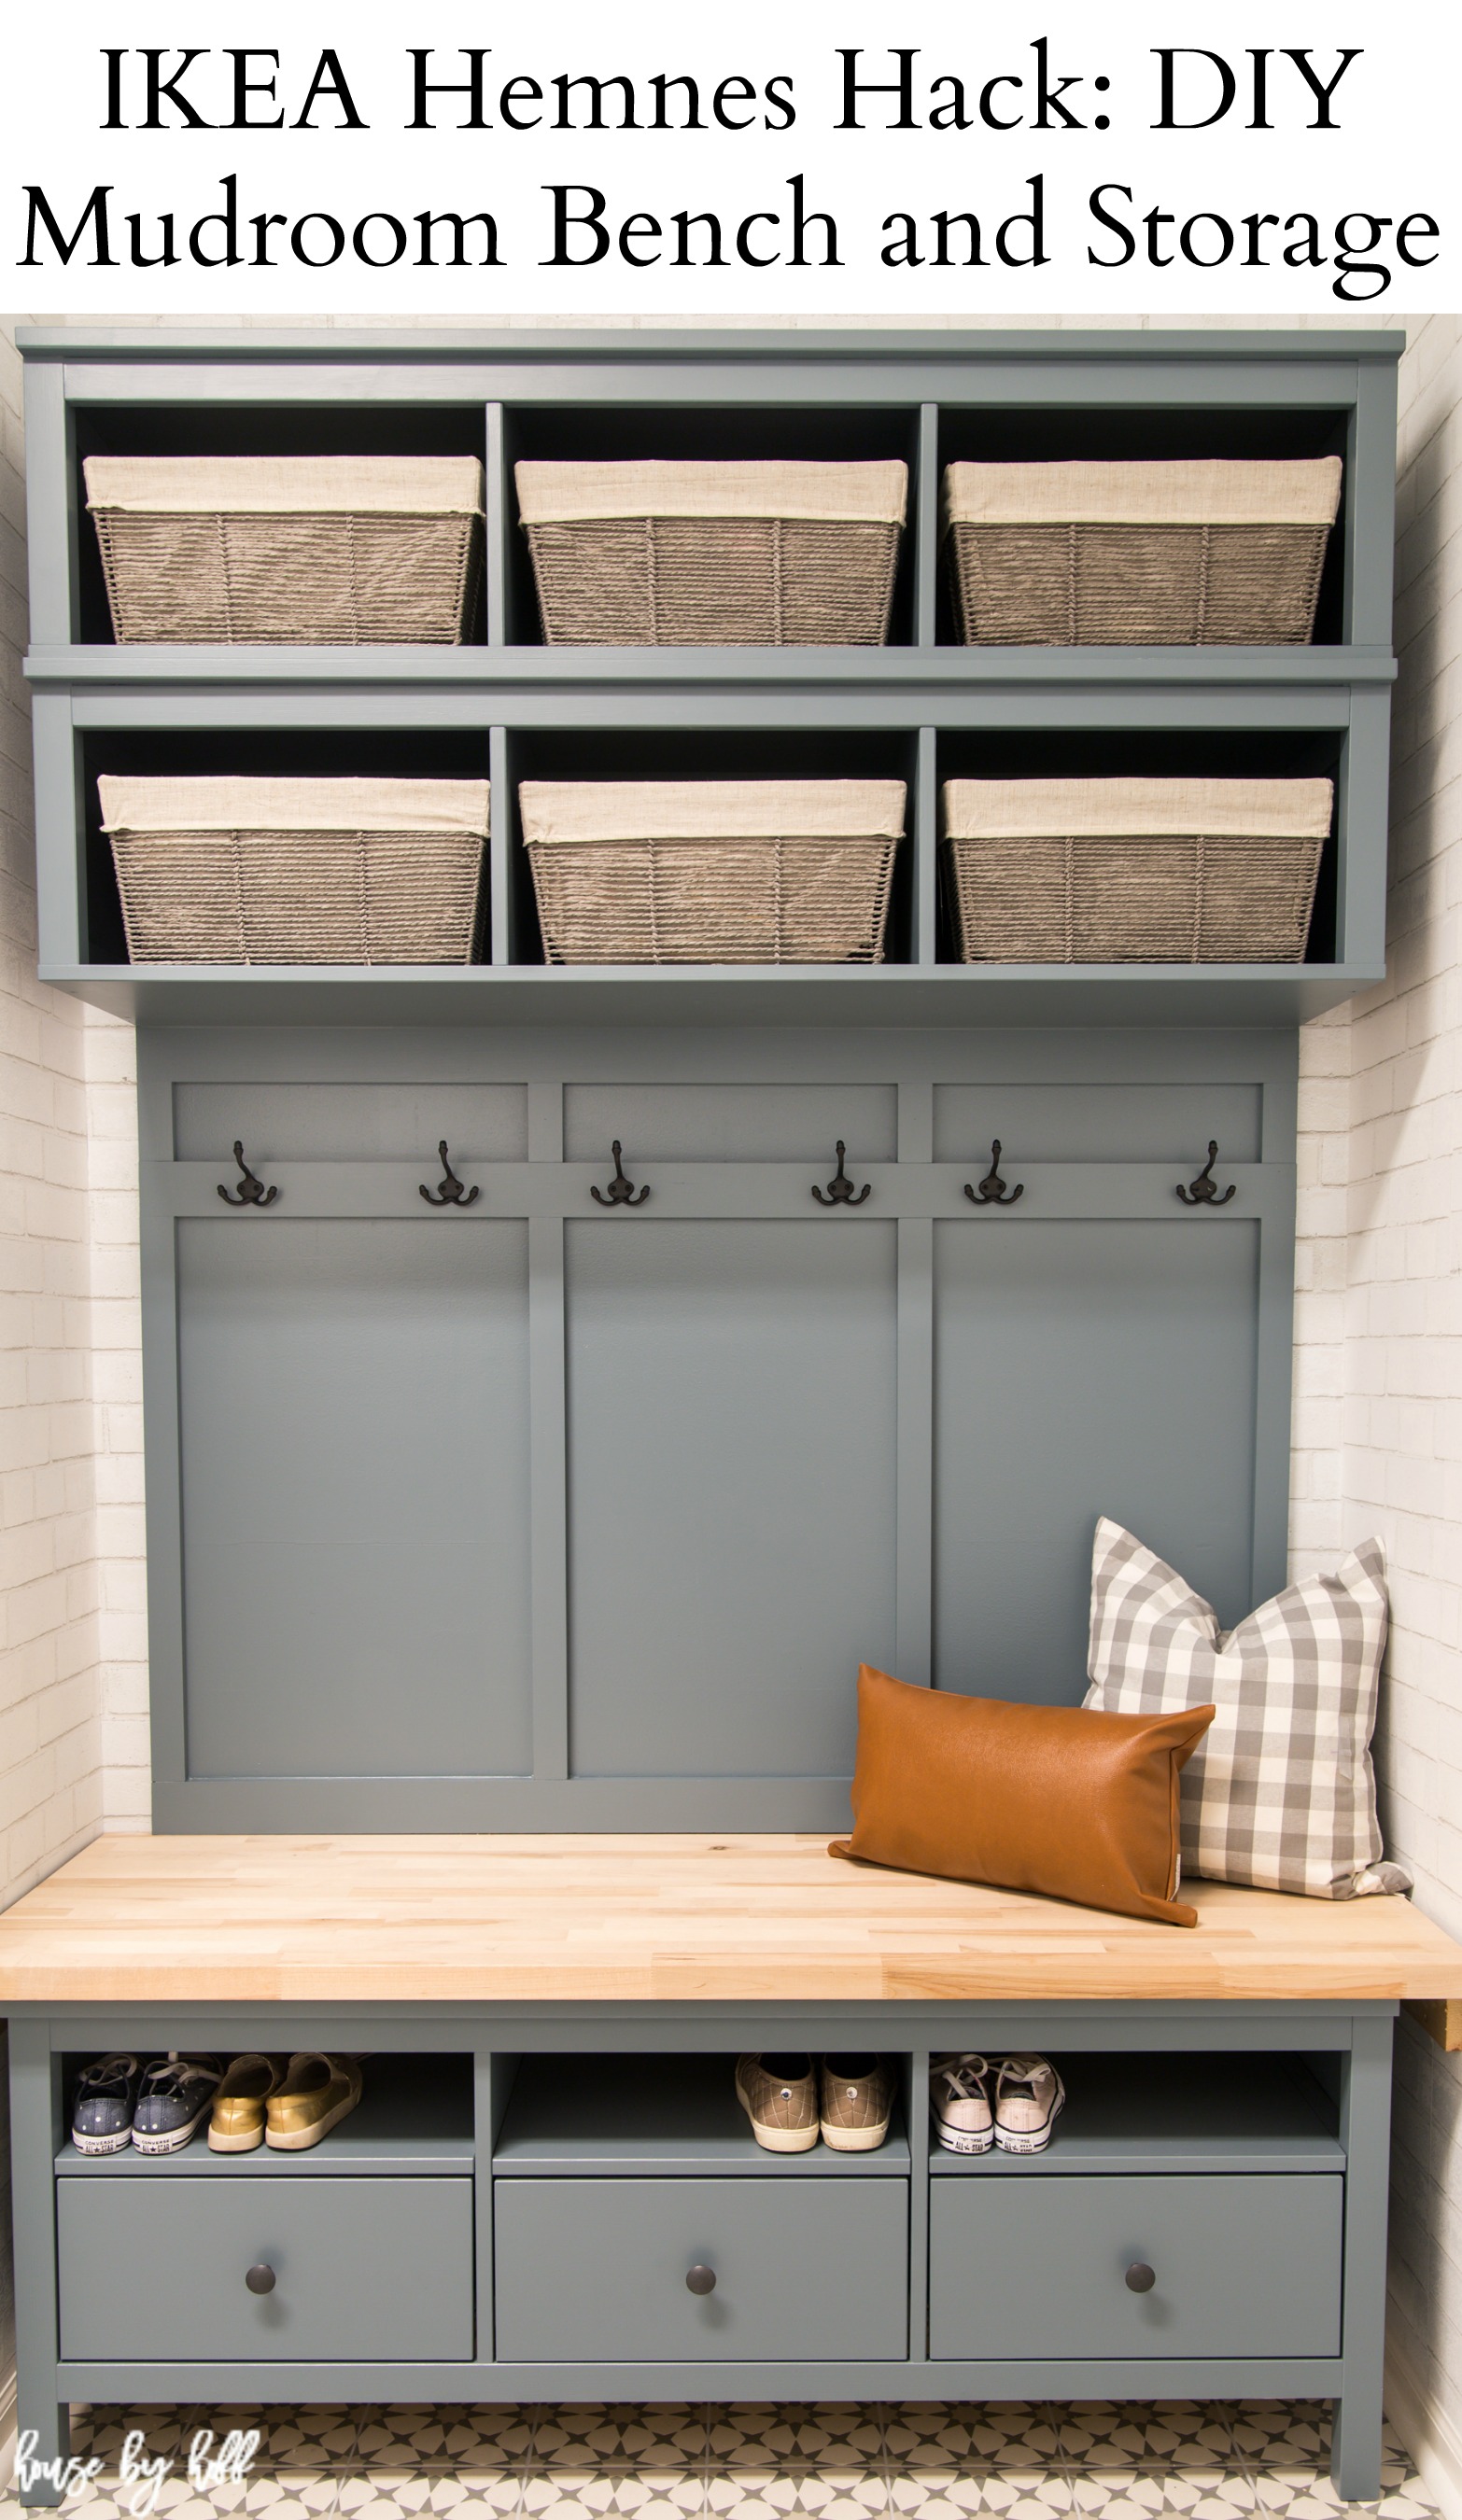 This genius hack turns a plain IKEA cabinet into a gorgeous, bespoke storage unit â€